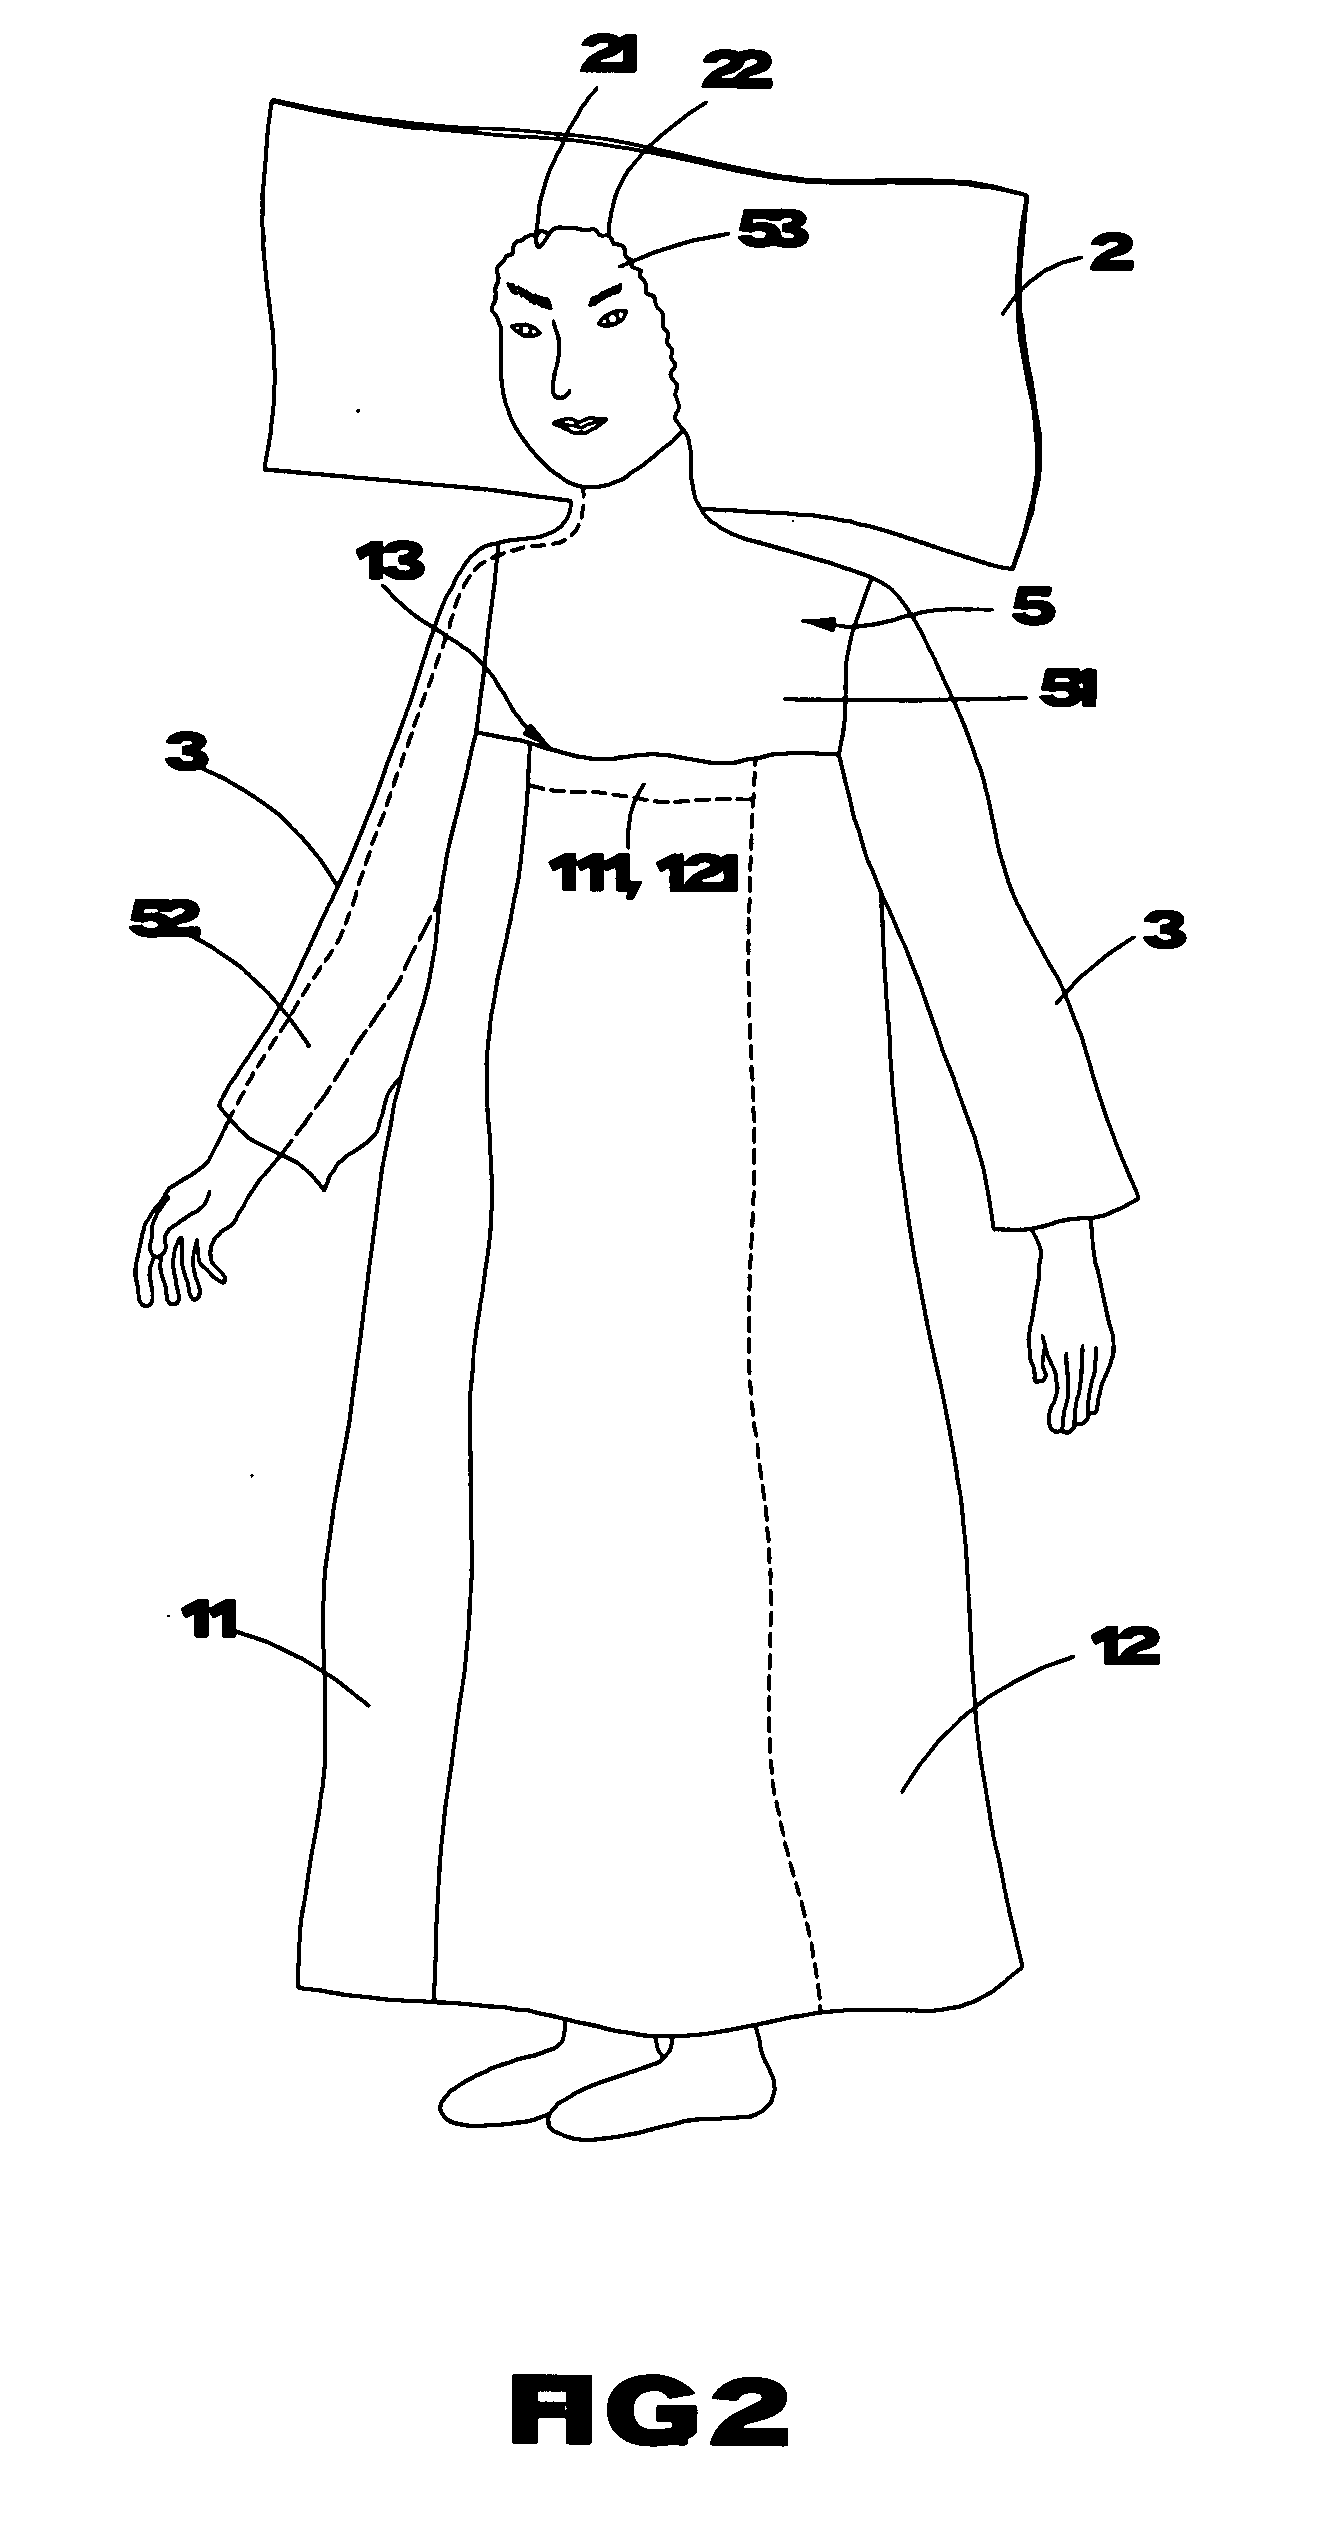 Garment with various utilities